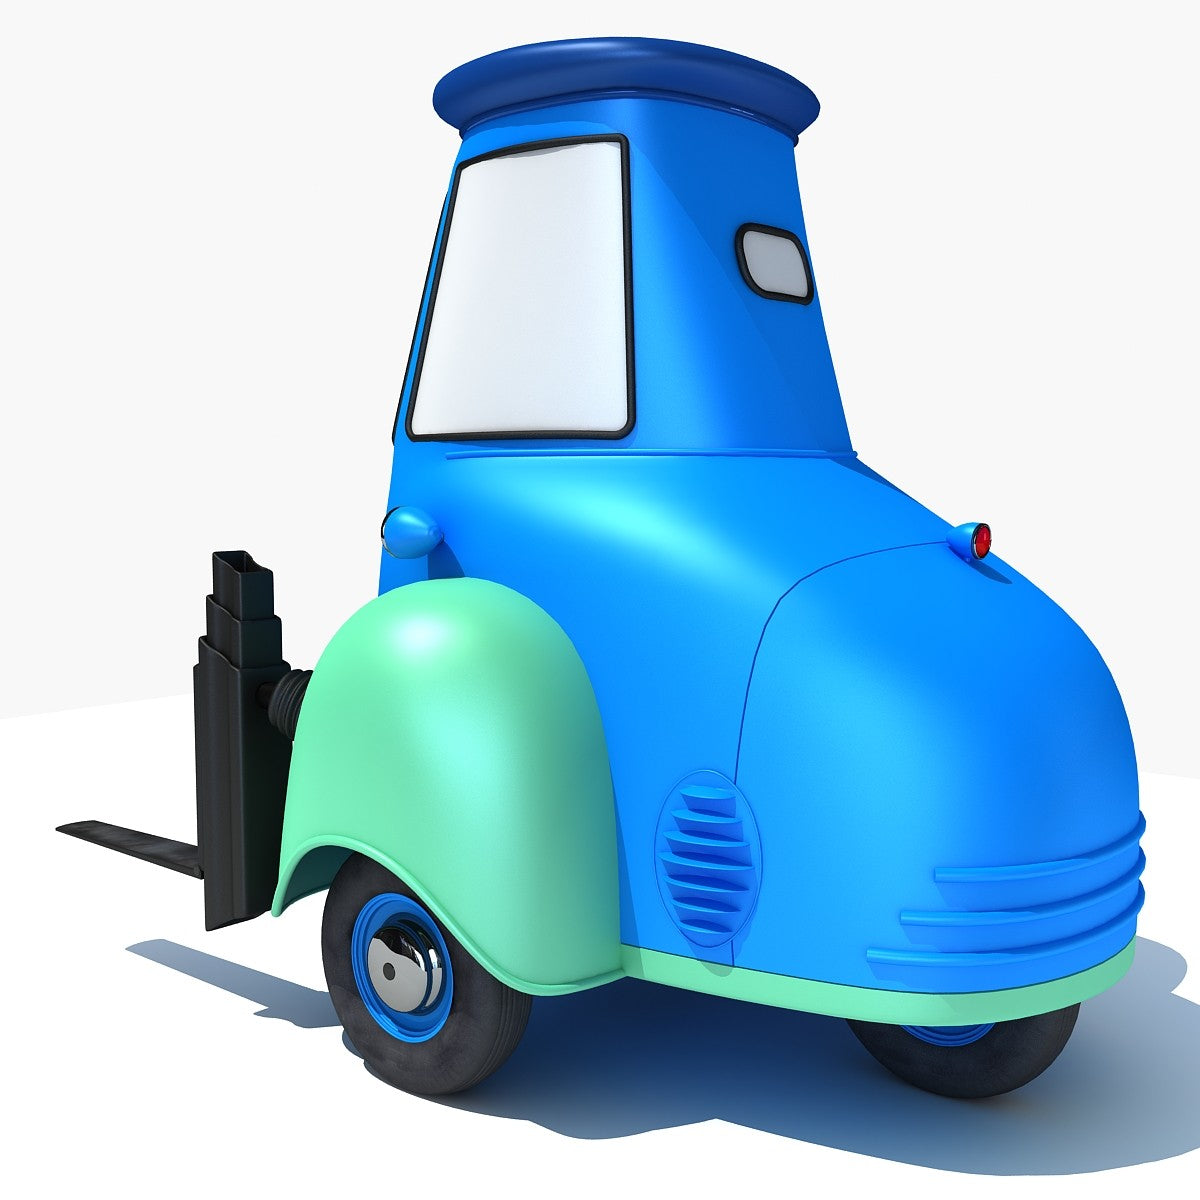 3D Cartoon Disney Cars Models